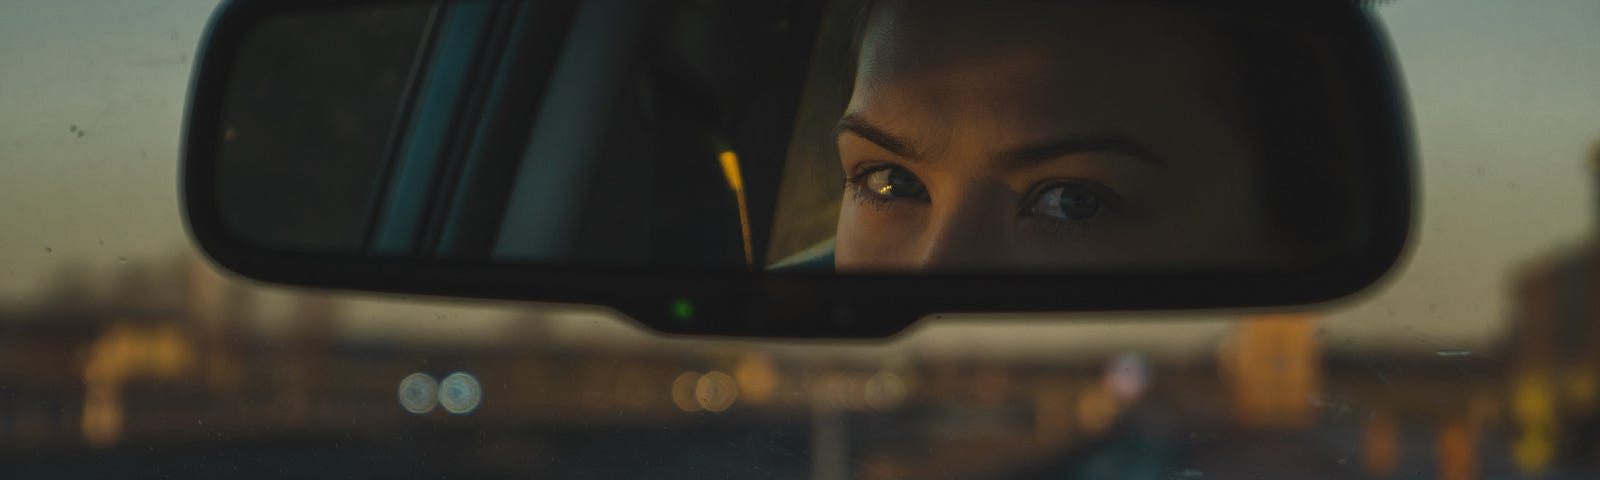 Woman looking in rear-view mirror